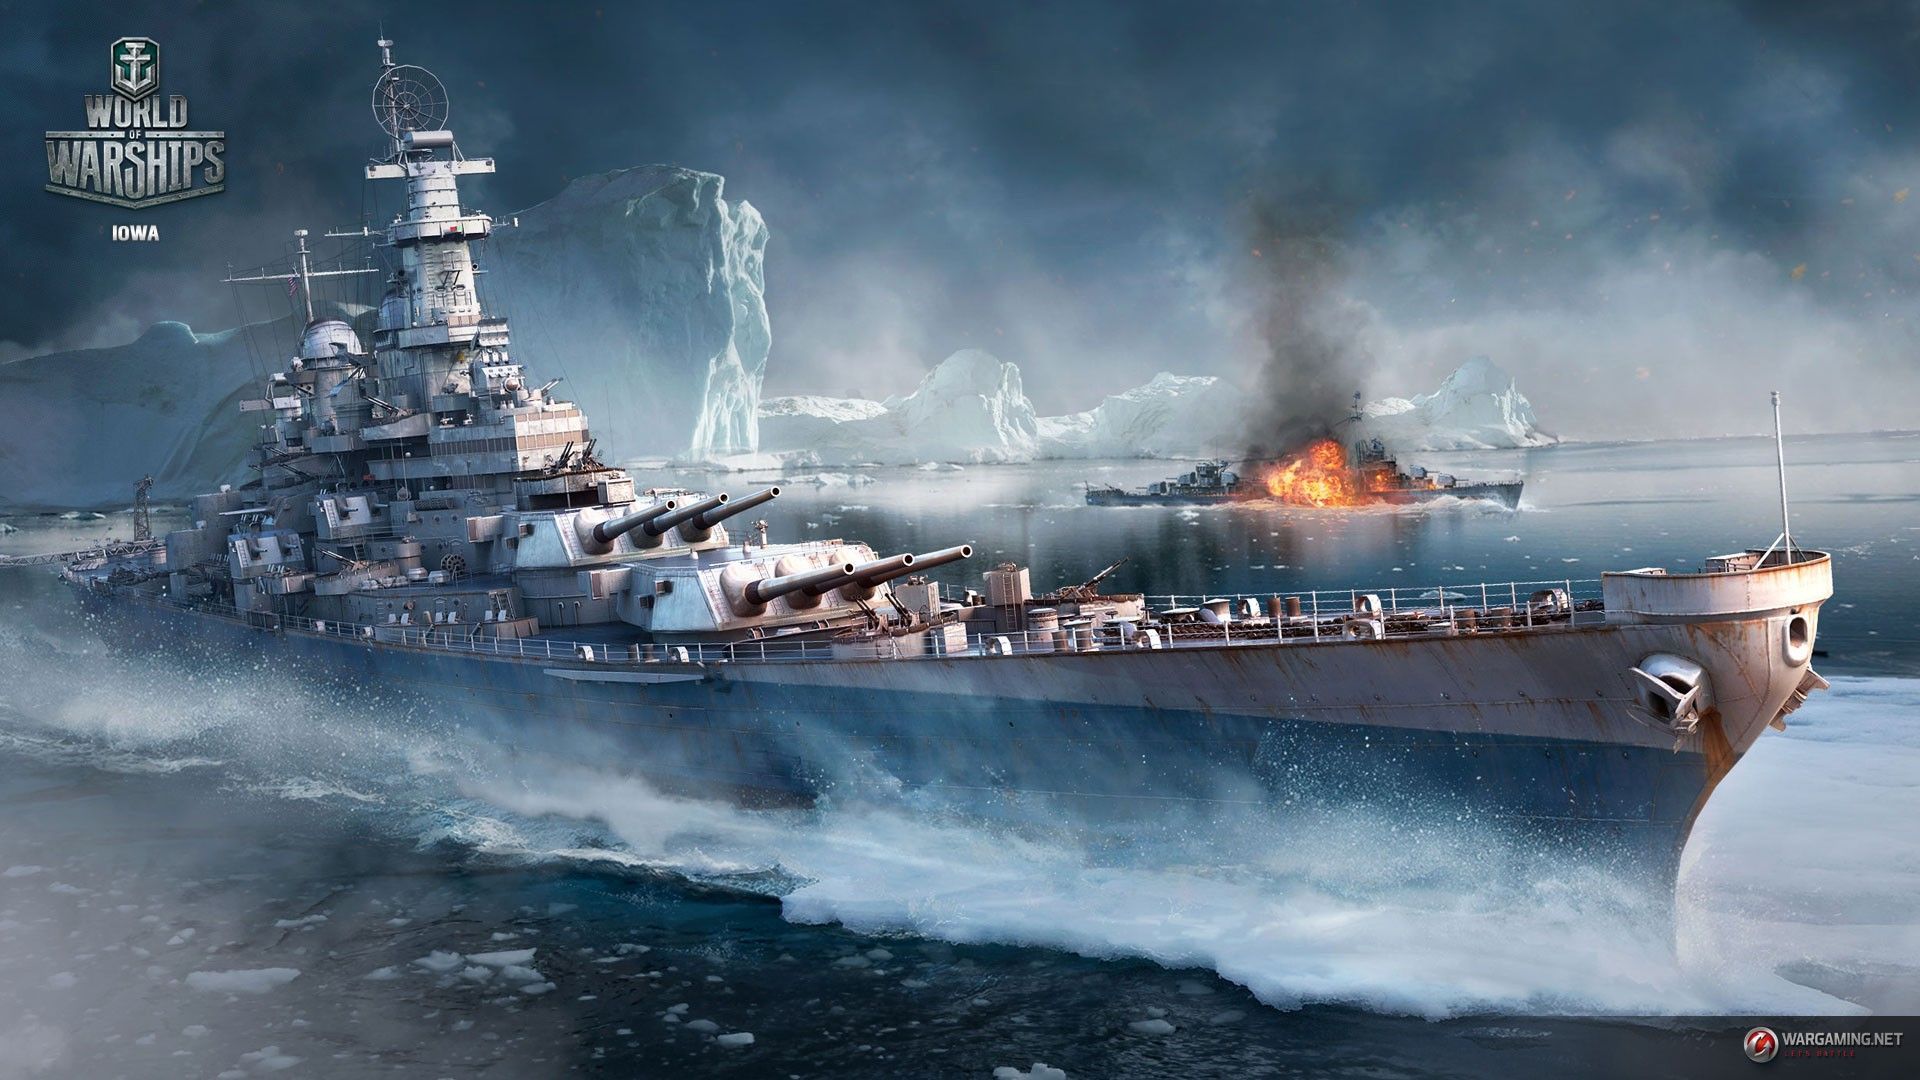 War Ships.com